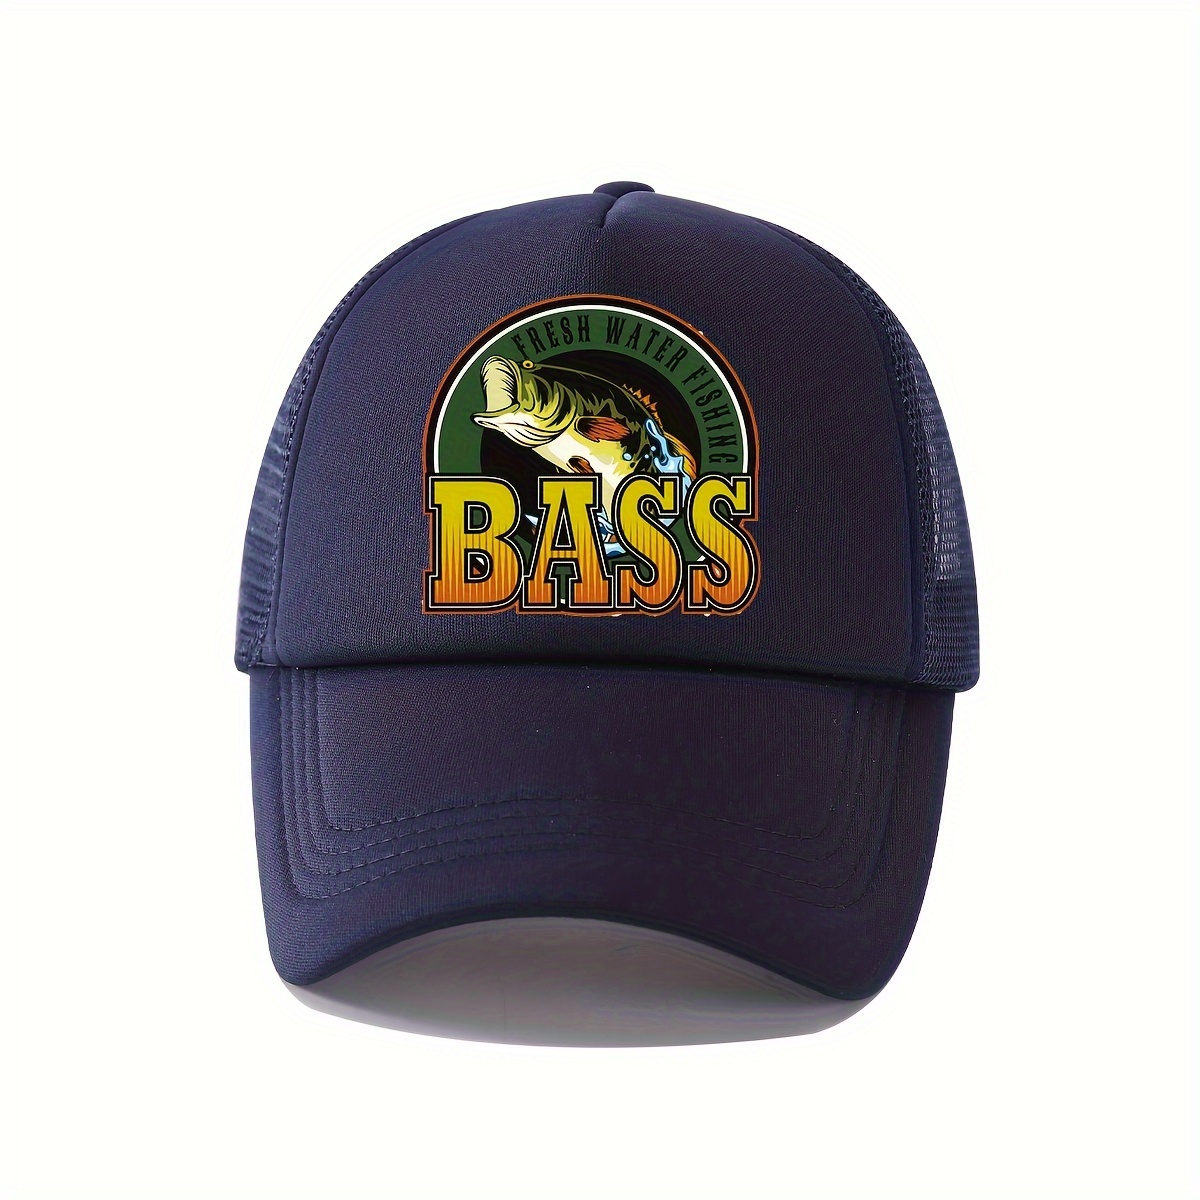 Bass Pro Shops Logo Hats for Women